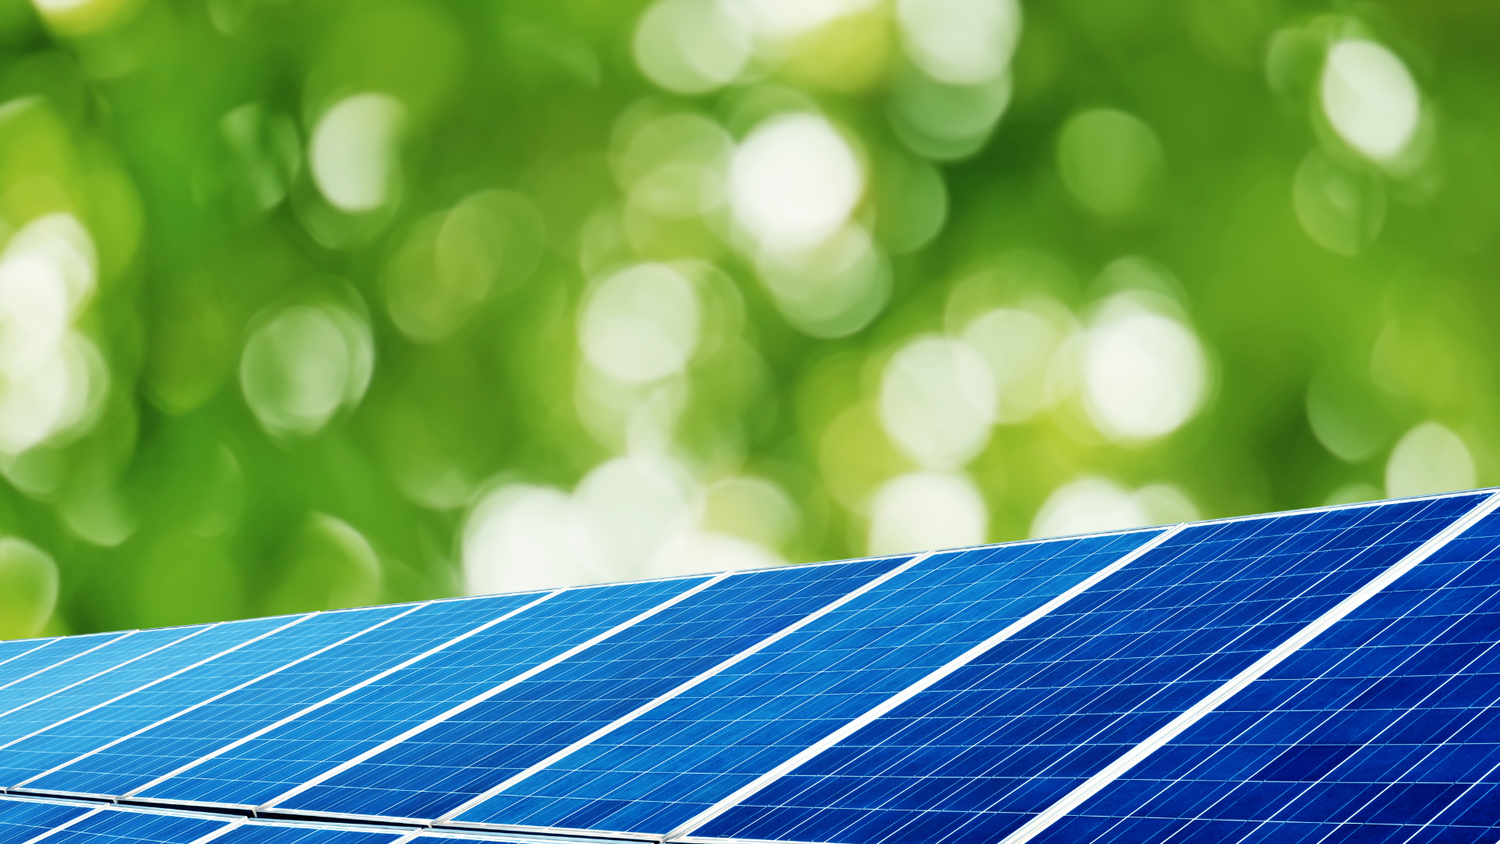 Big tech solutions drive clean solar innovation